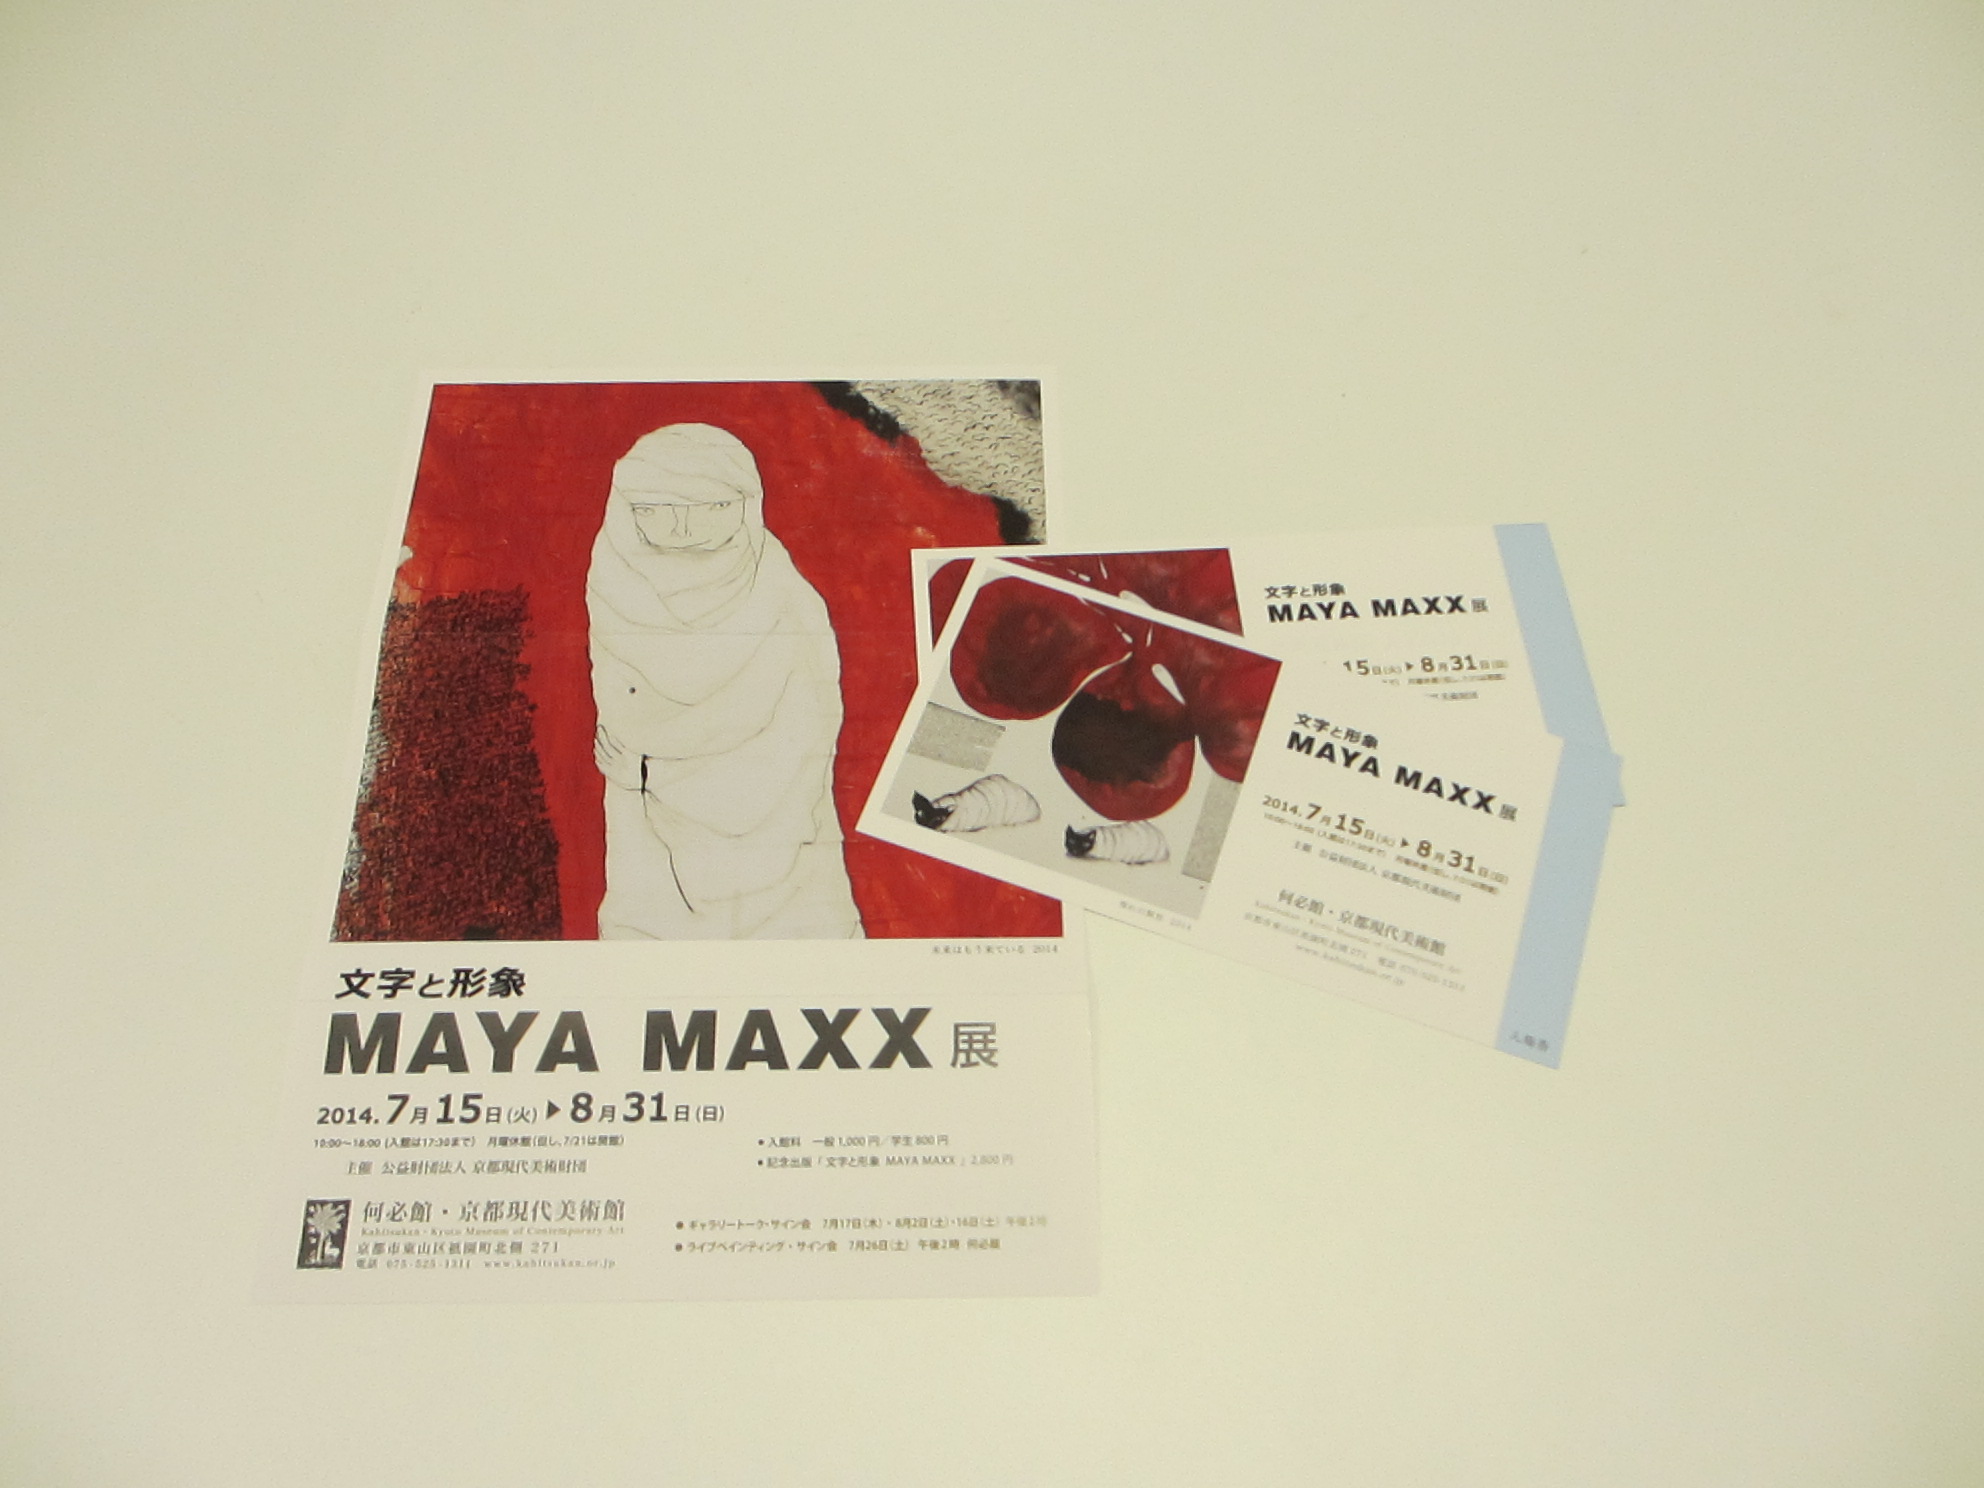 「MAYA MAXX」展